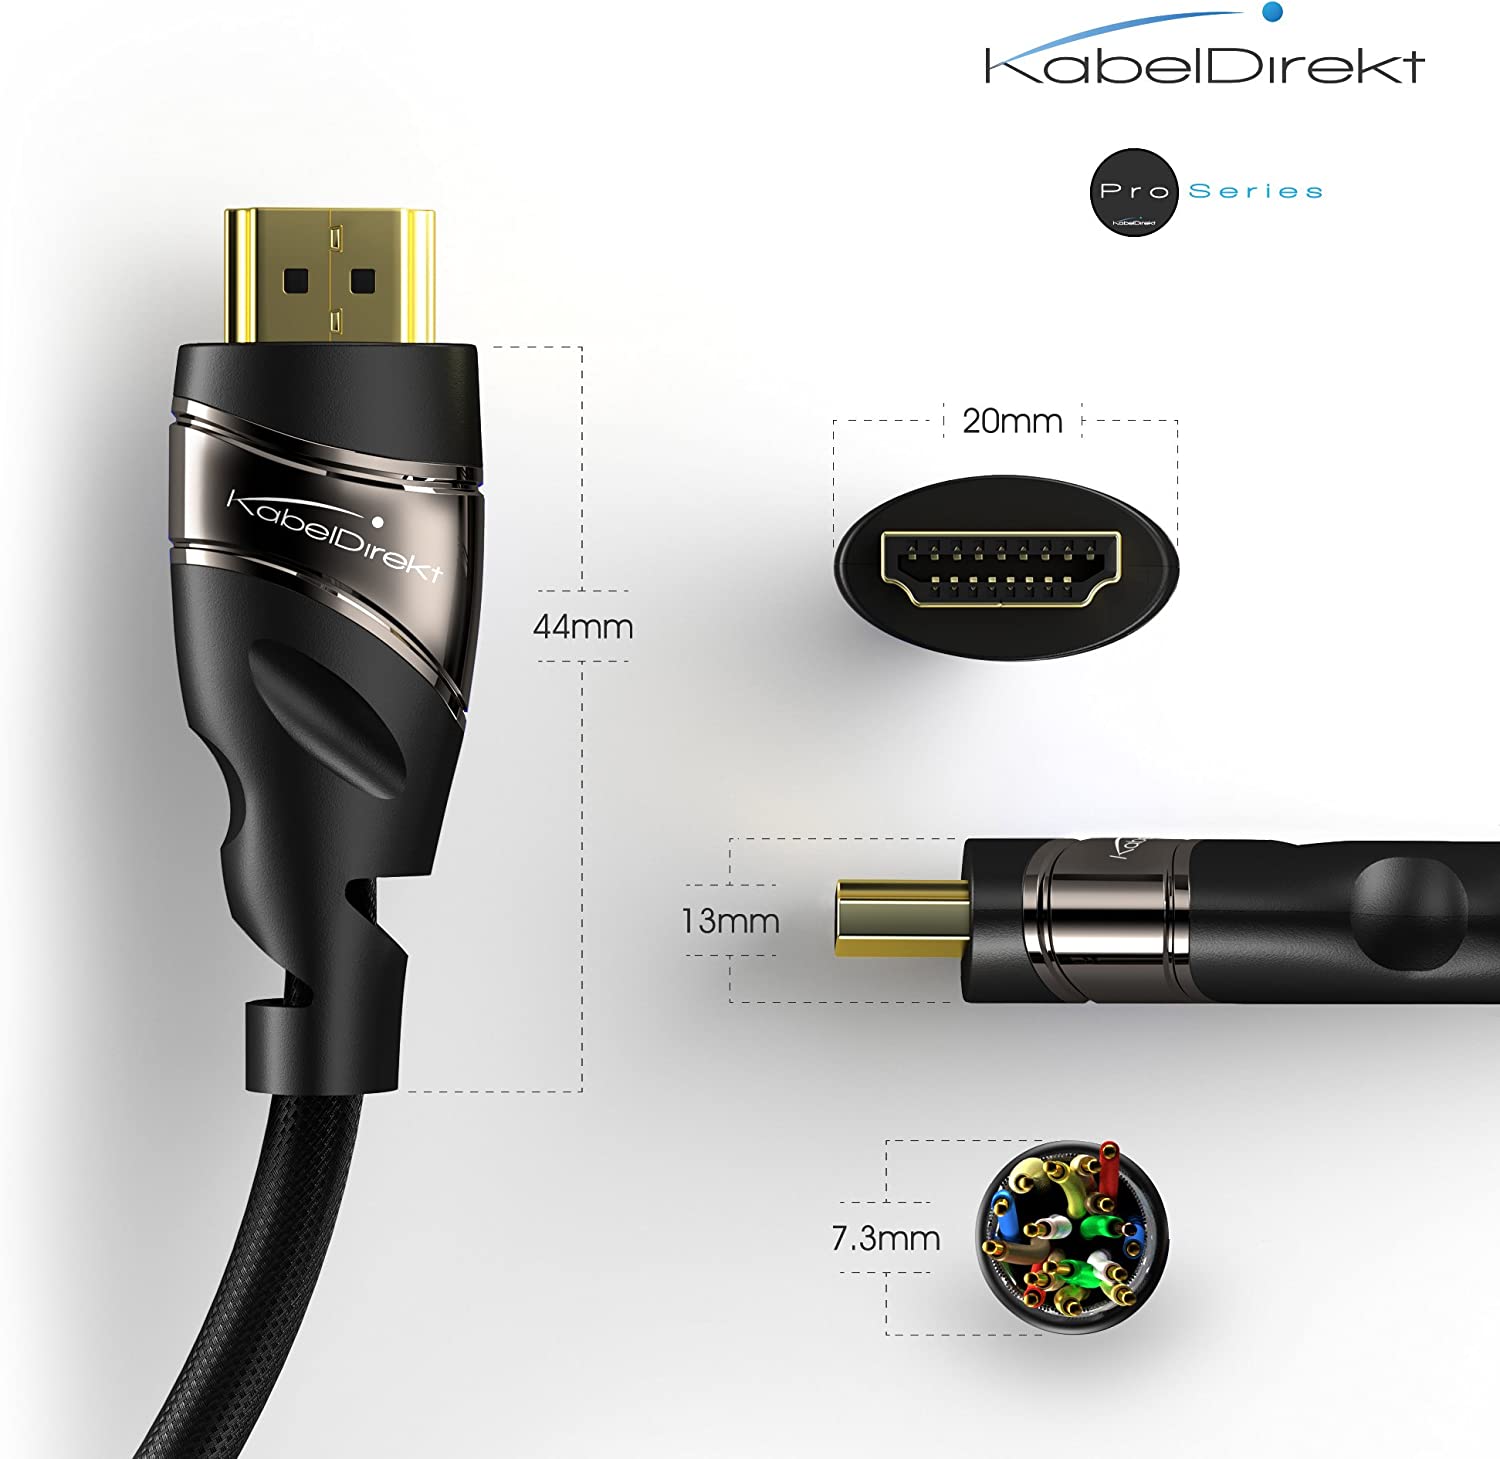 KabelDirekt Pro 系列 HDMI 线缆